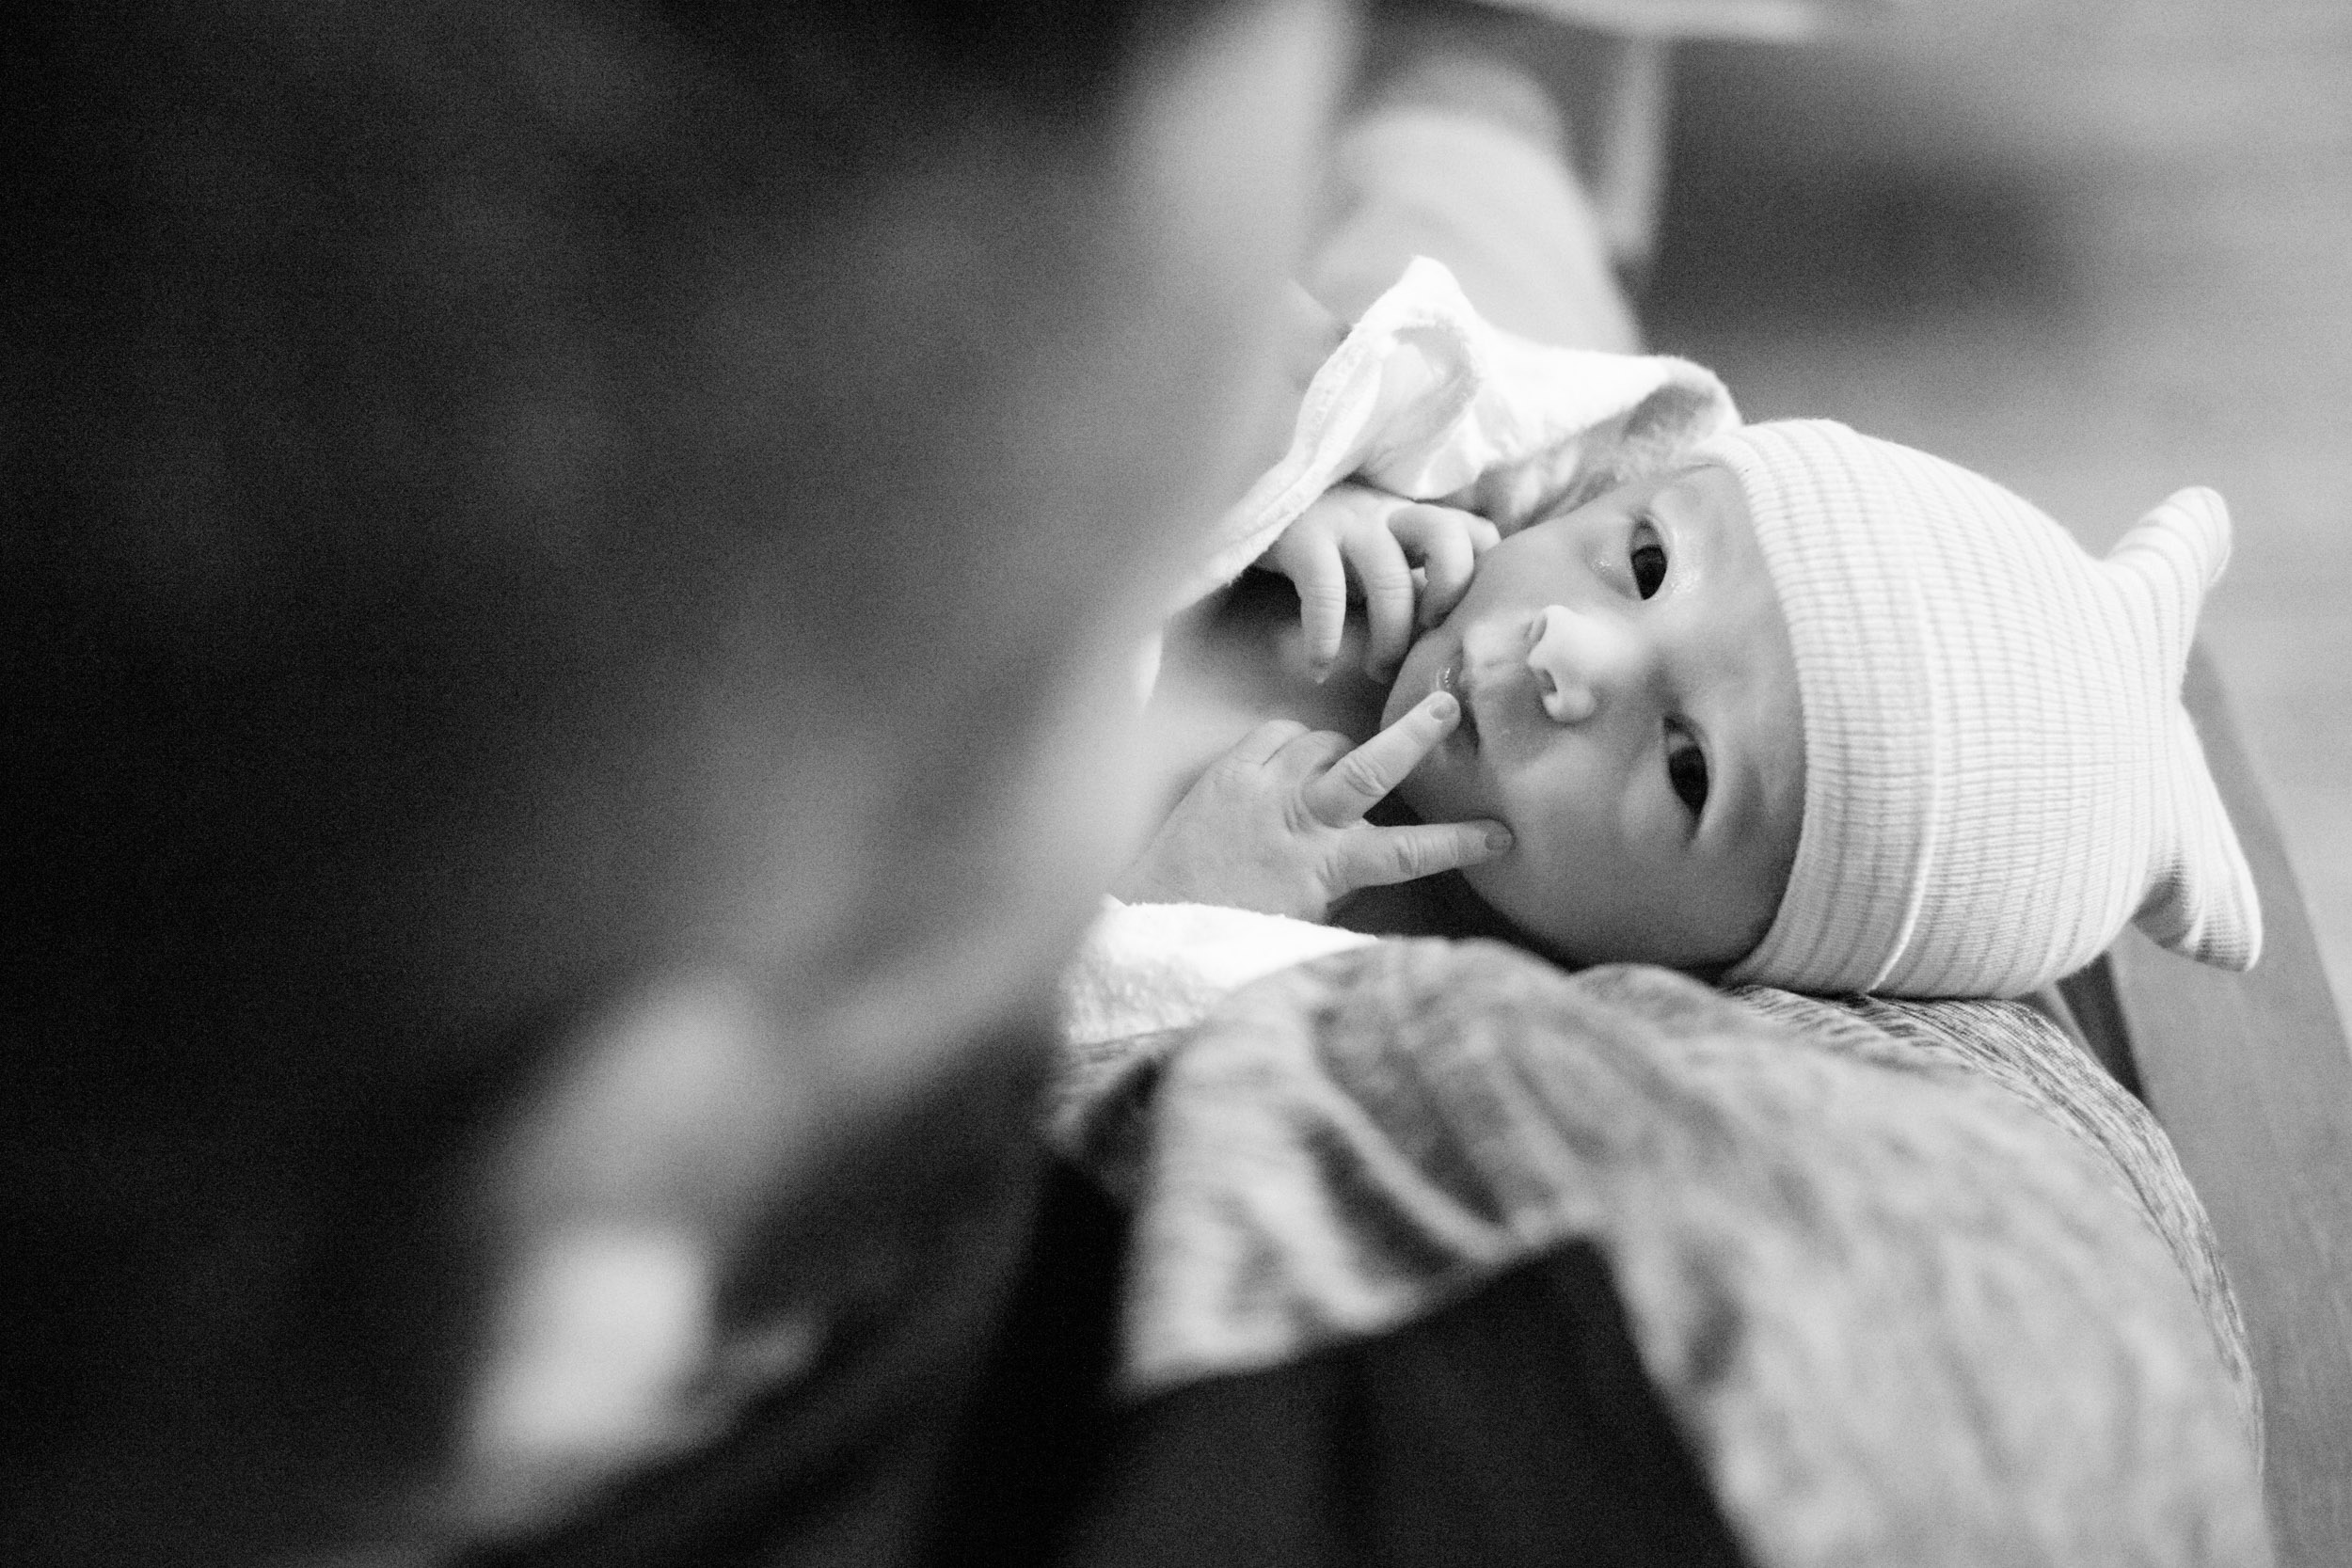 newborn baby looking up at the camera